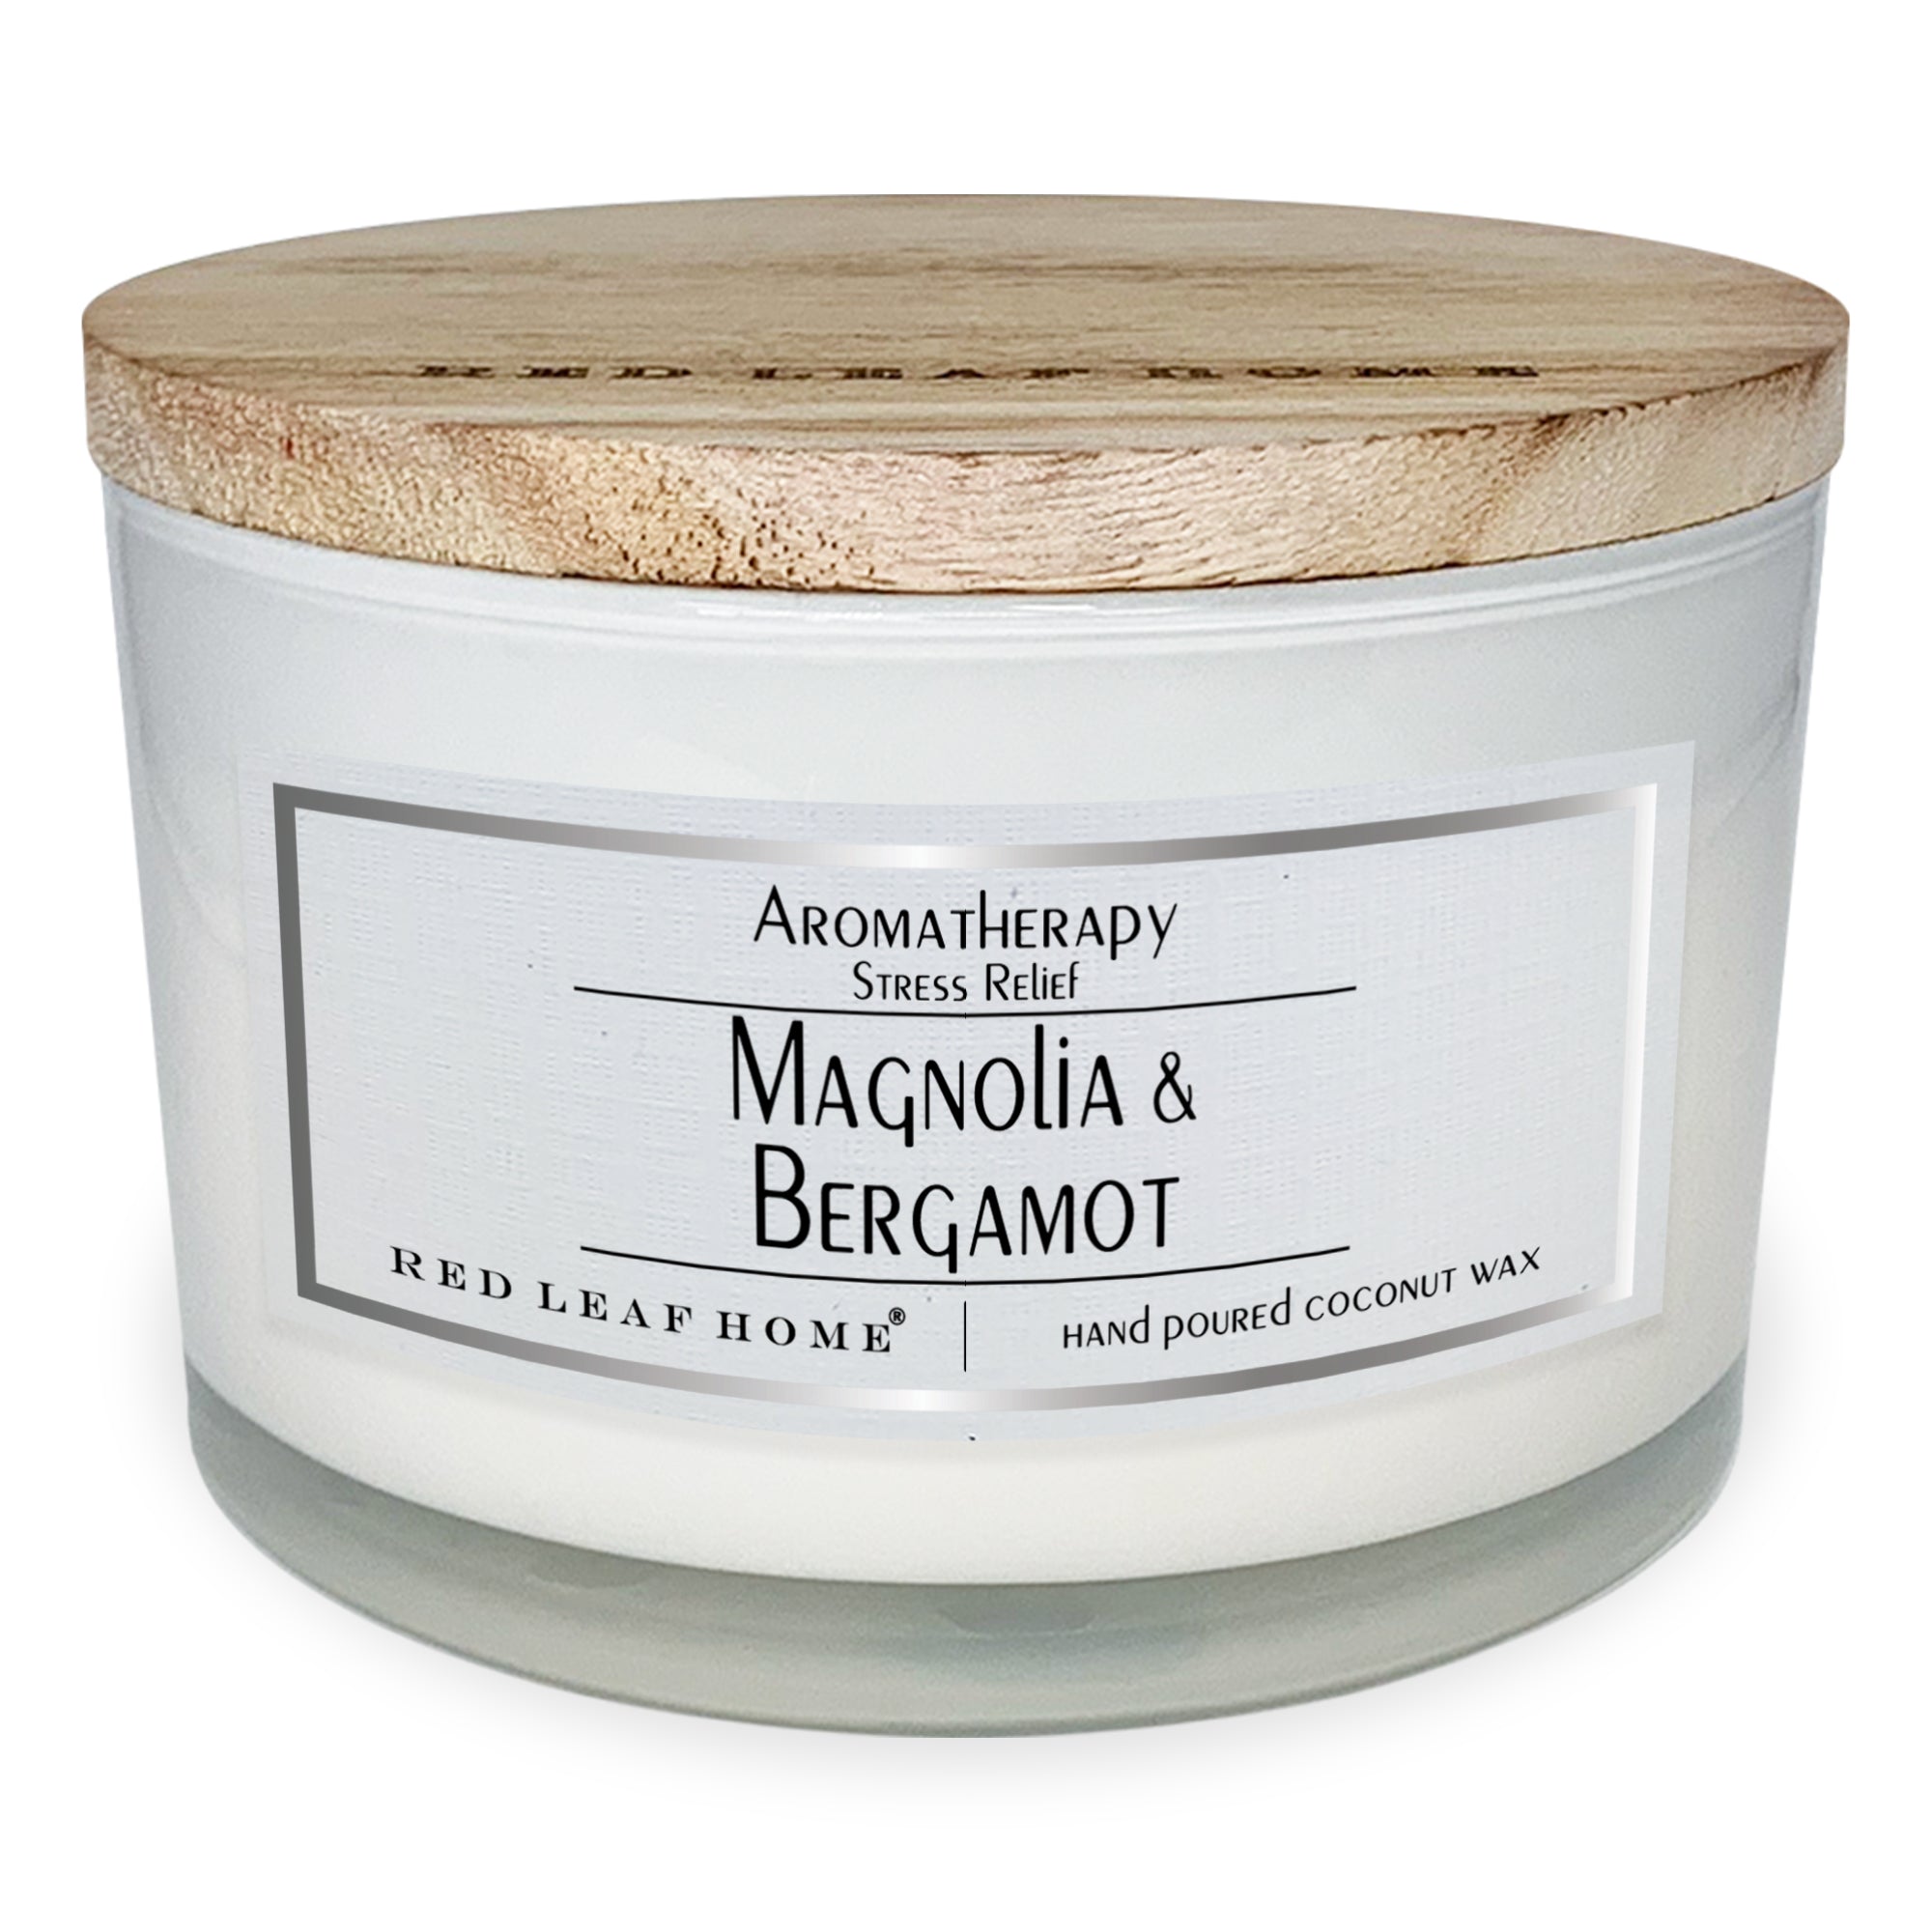 Magnolia and Bergamot Aromatherapy